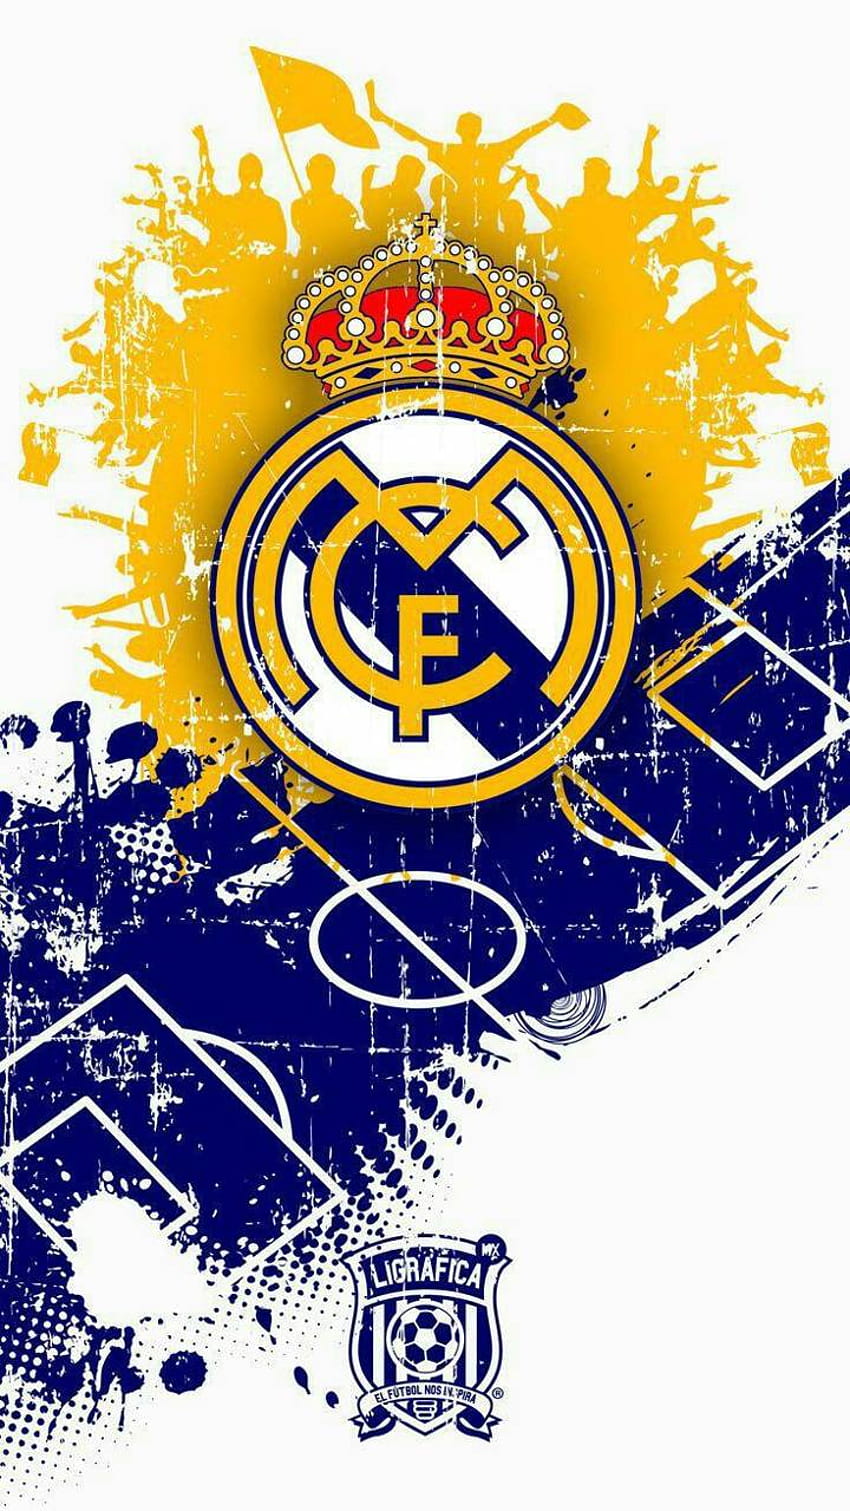 Wallpaper ID 454297  Sports Real Madrid CF Phone Wallpaper Soccer  720x1280 free download